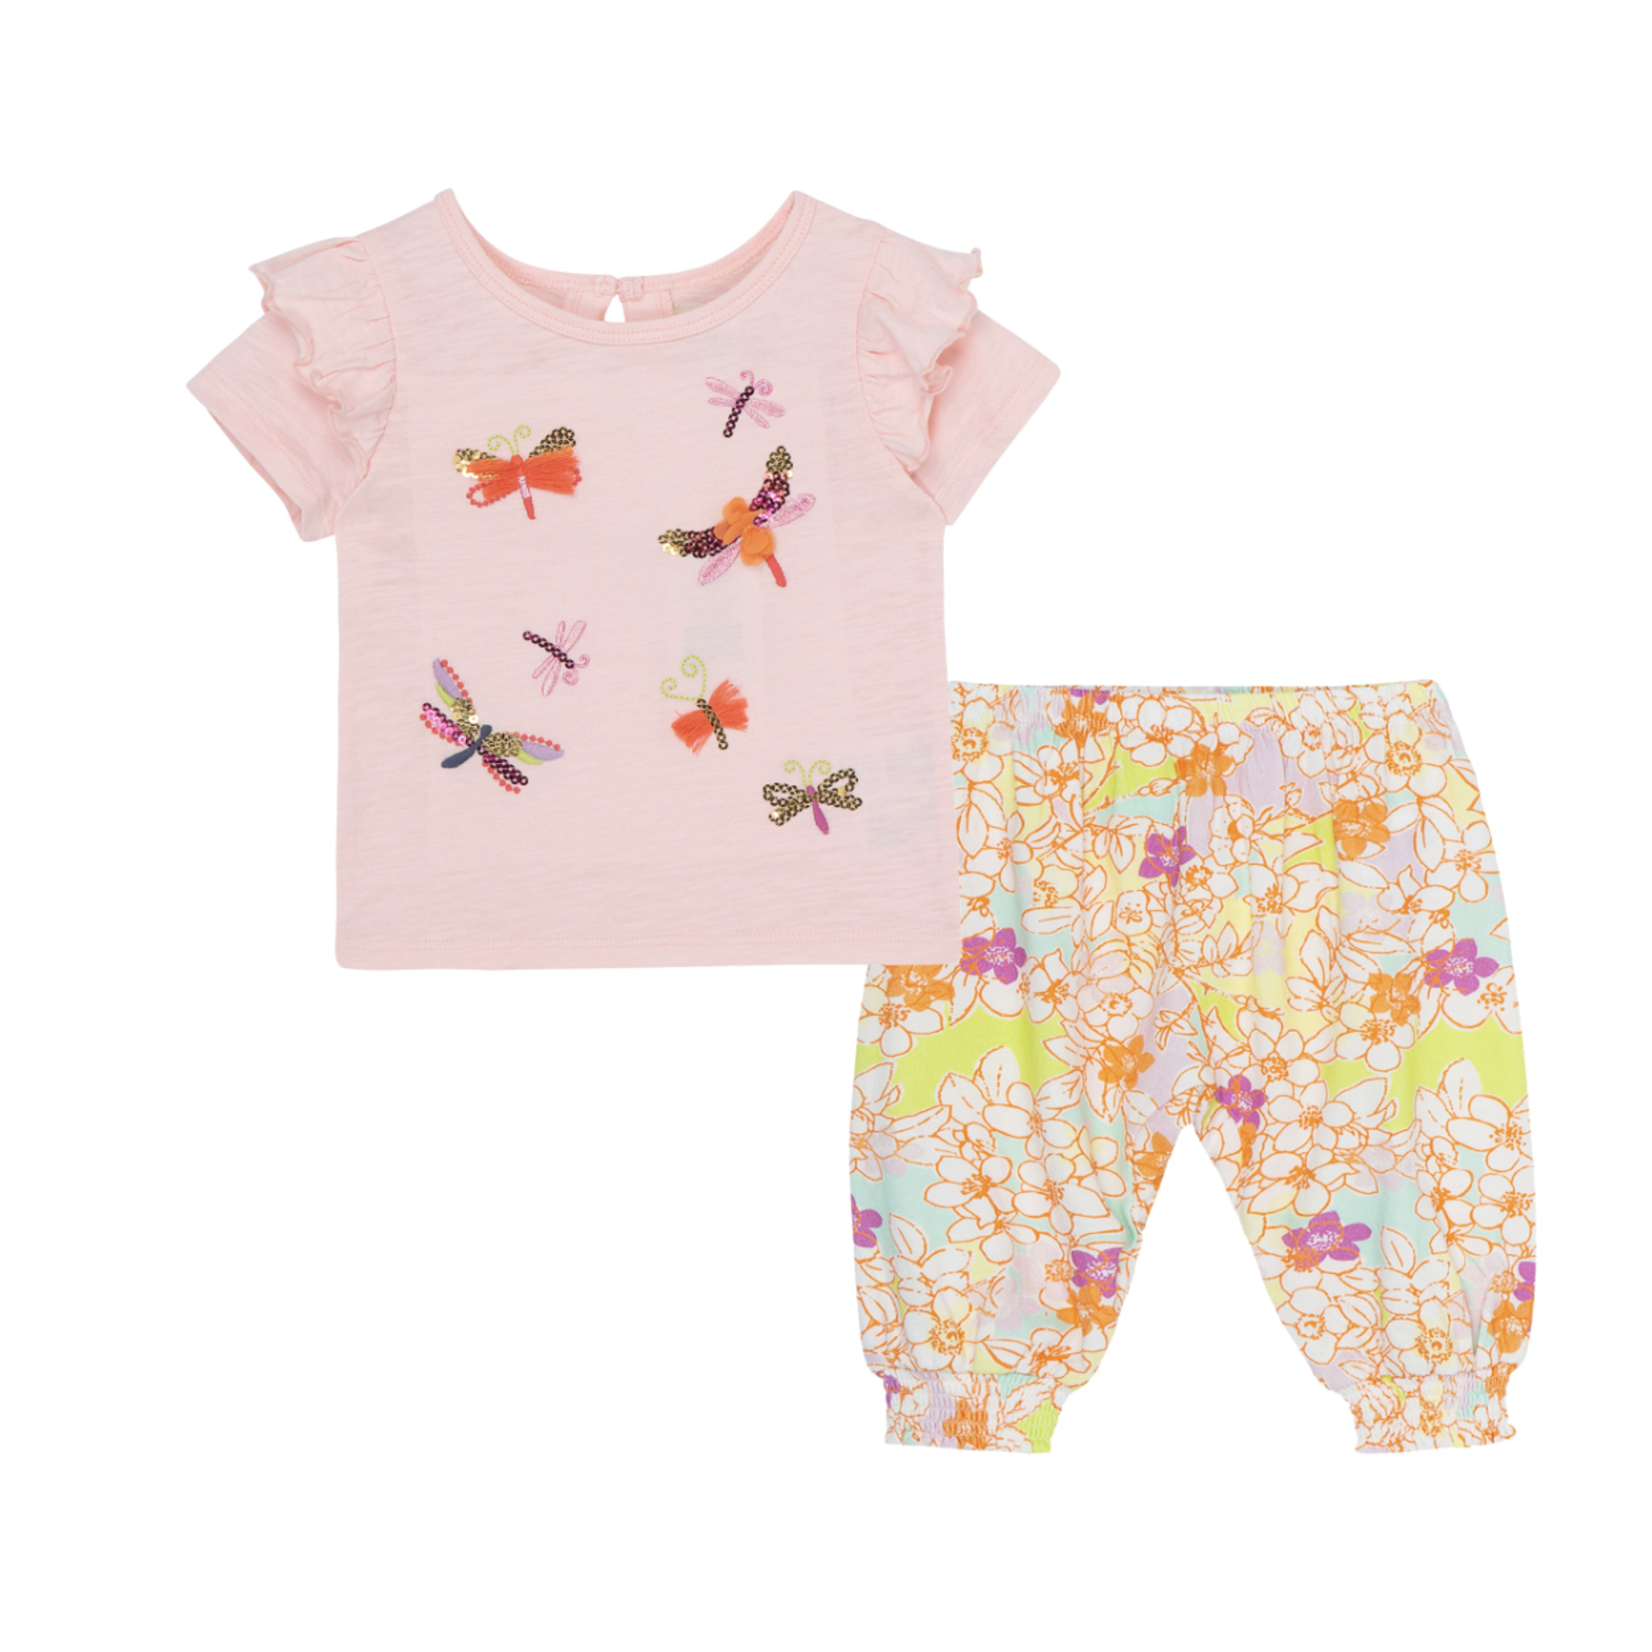 Peek Aren't You Curious Dragonfly Embellished Floral Print T-Shirt & Pants Set